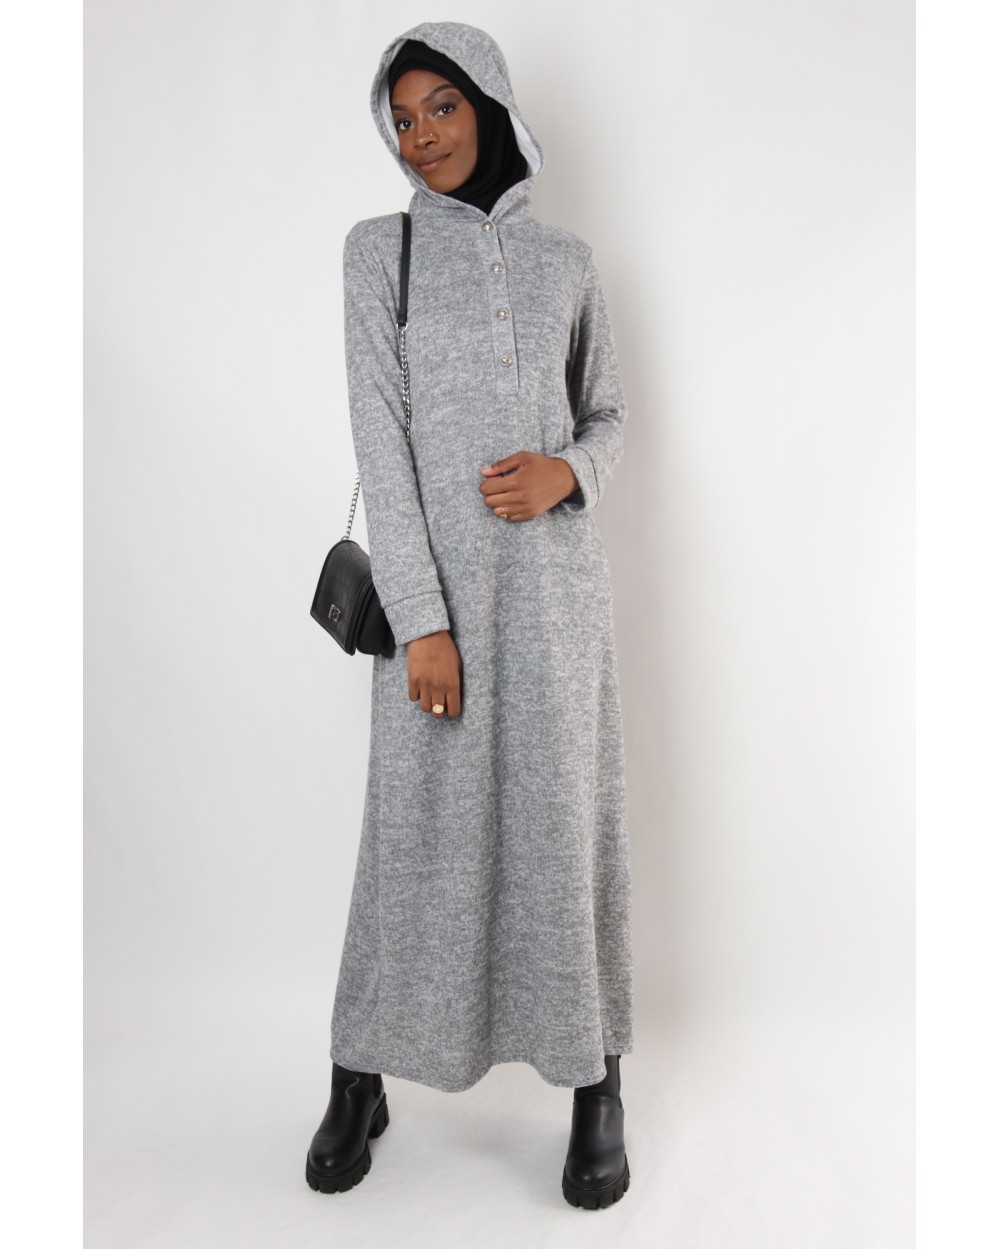 Rytali dress with hood and pockets